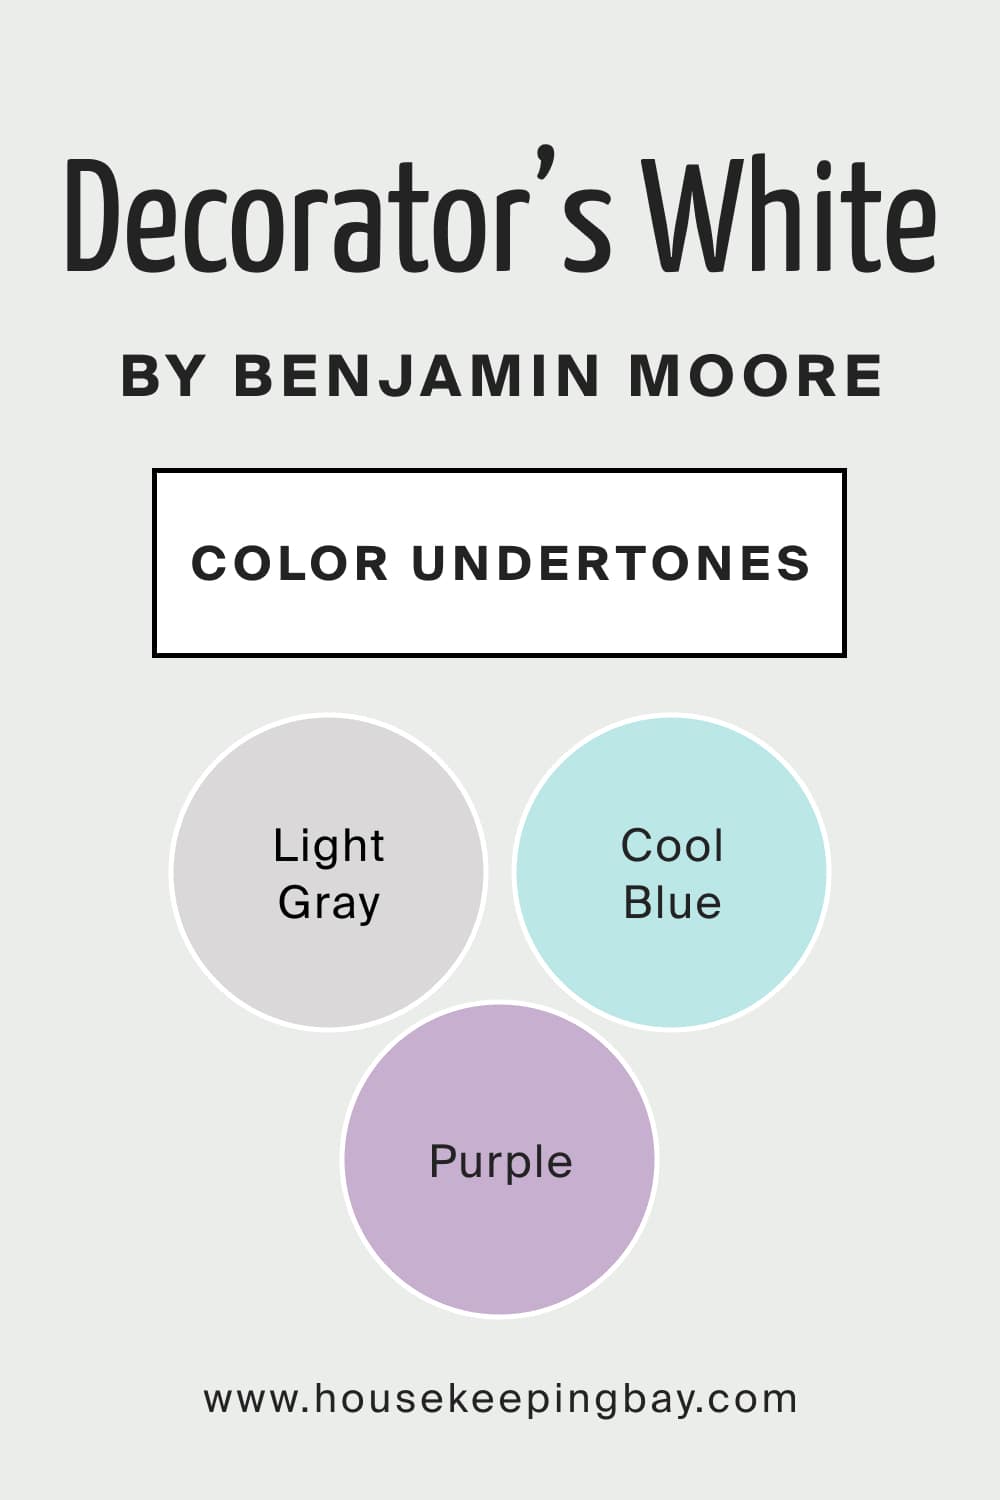 Decorator’s White CC 20 by Benjamin Moore Color Undertones